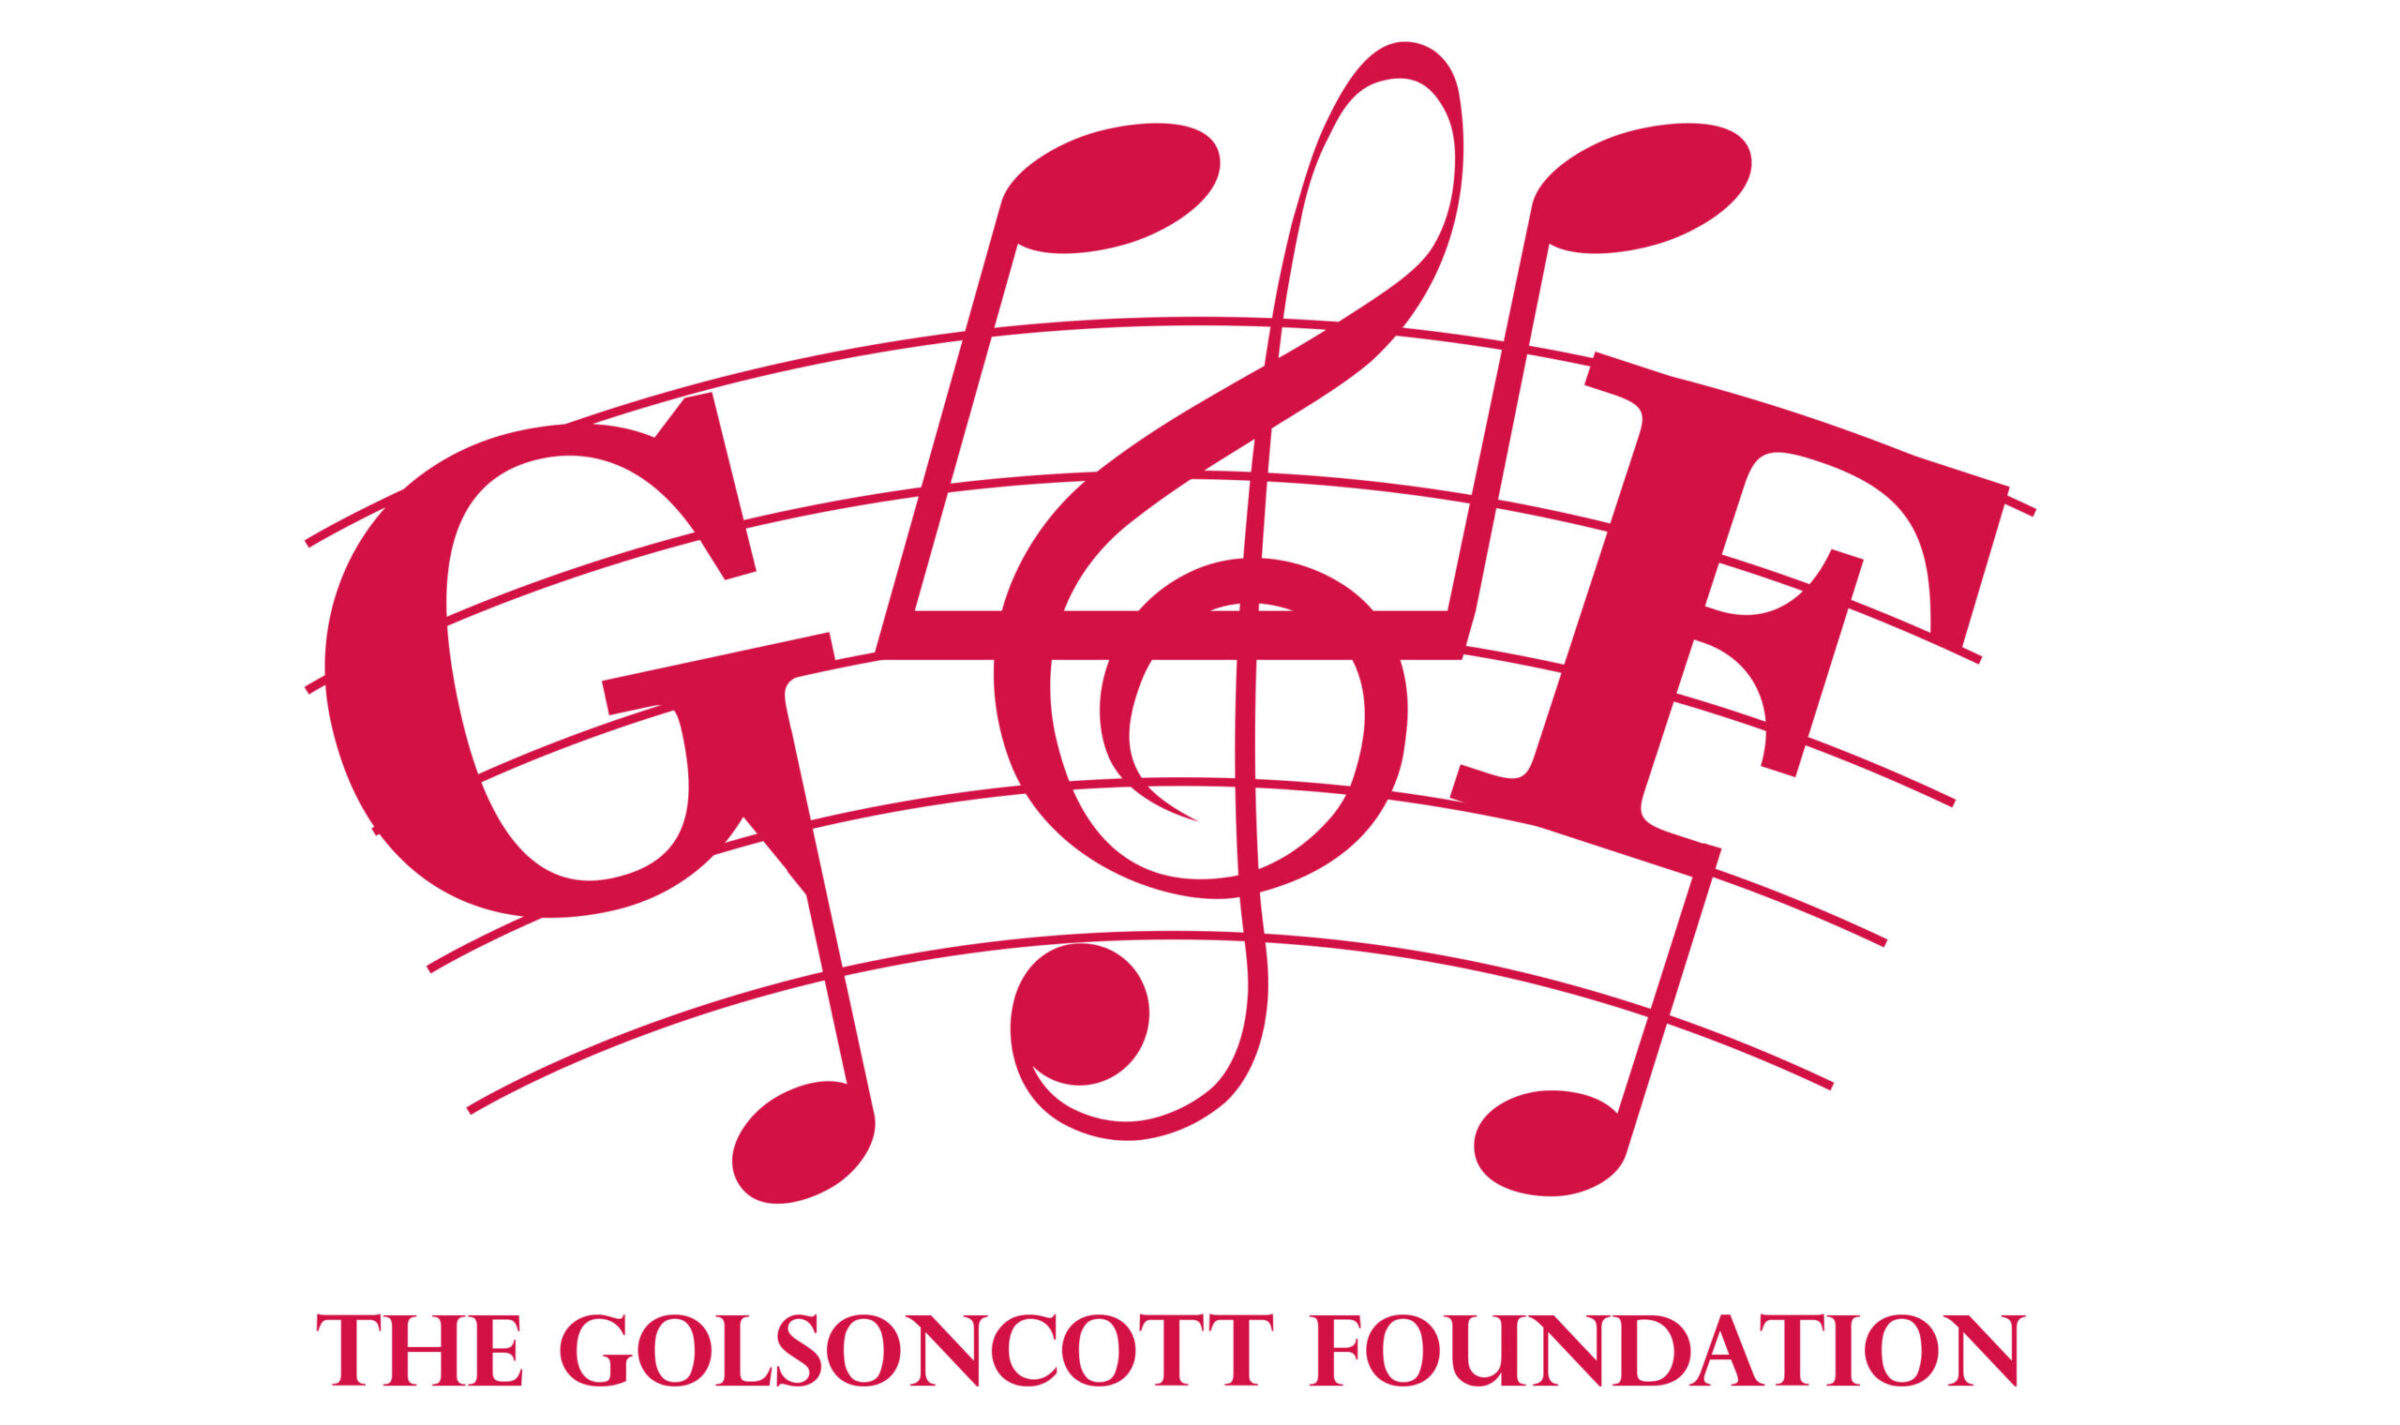 http://www.artsung.com/wp-content/uploads/2021/12/Golsoncott-image-logo-scaled-e1639596379806.jpg